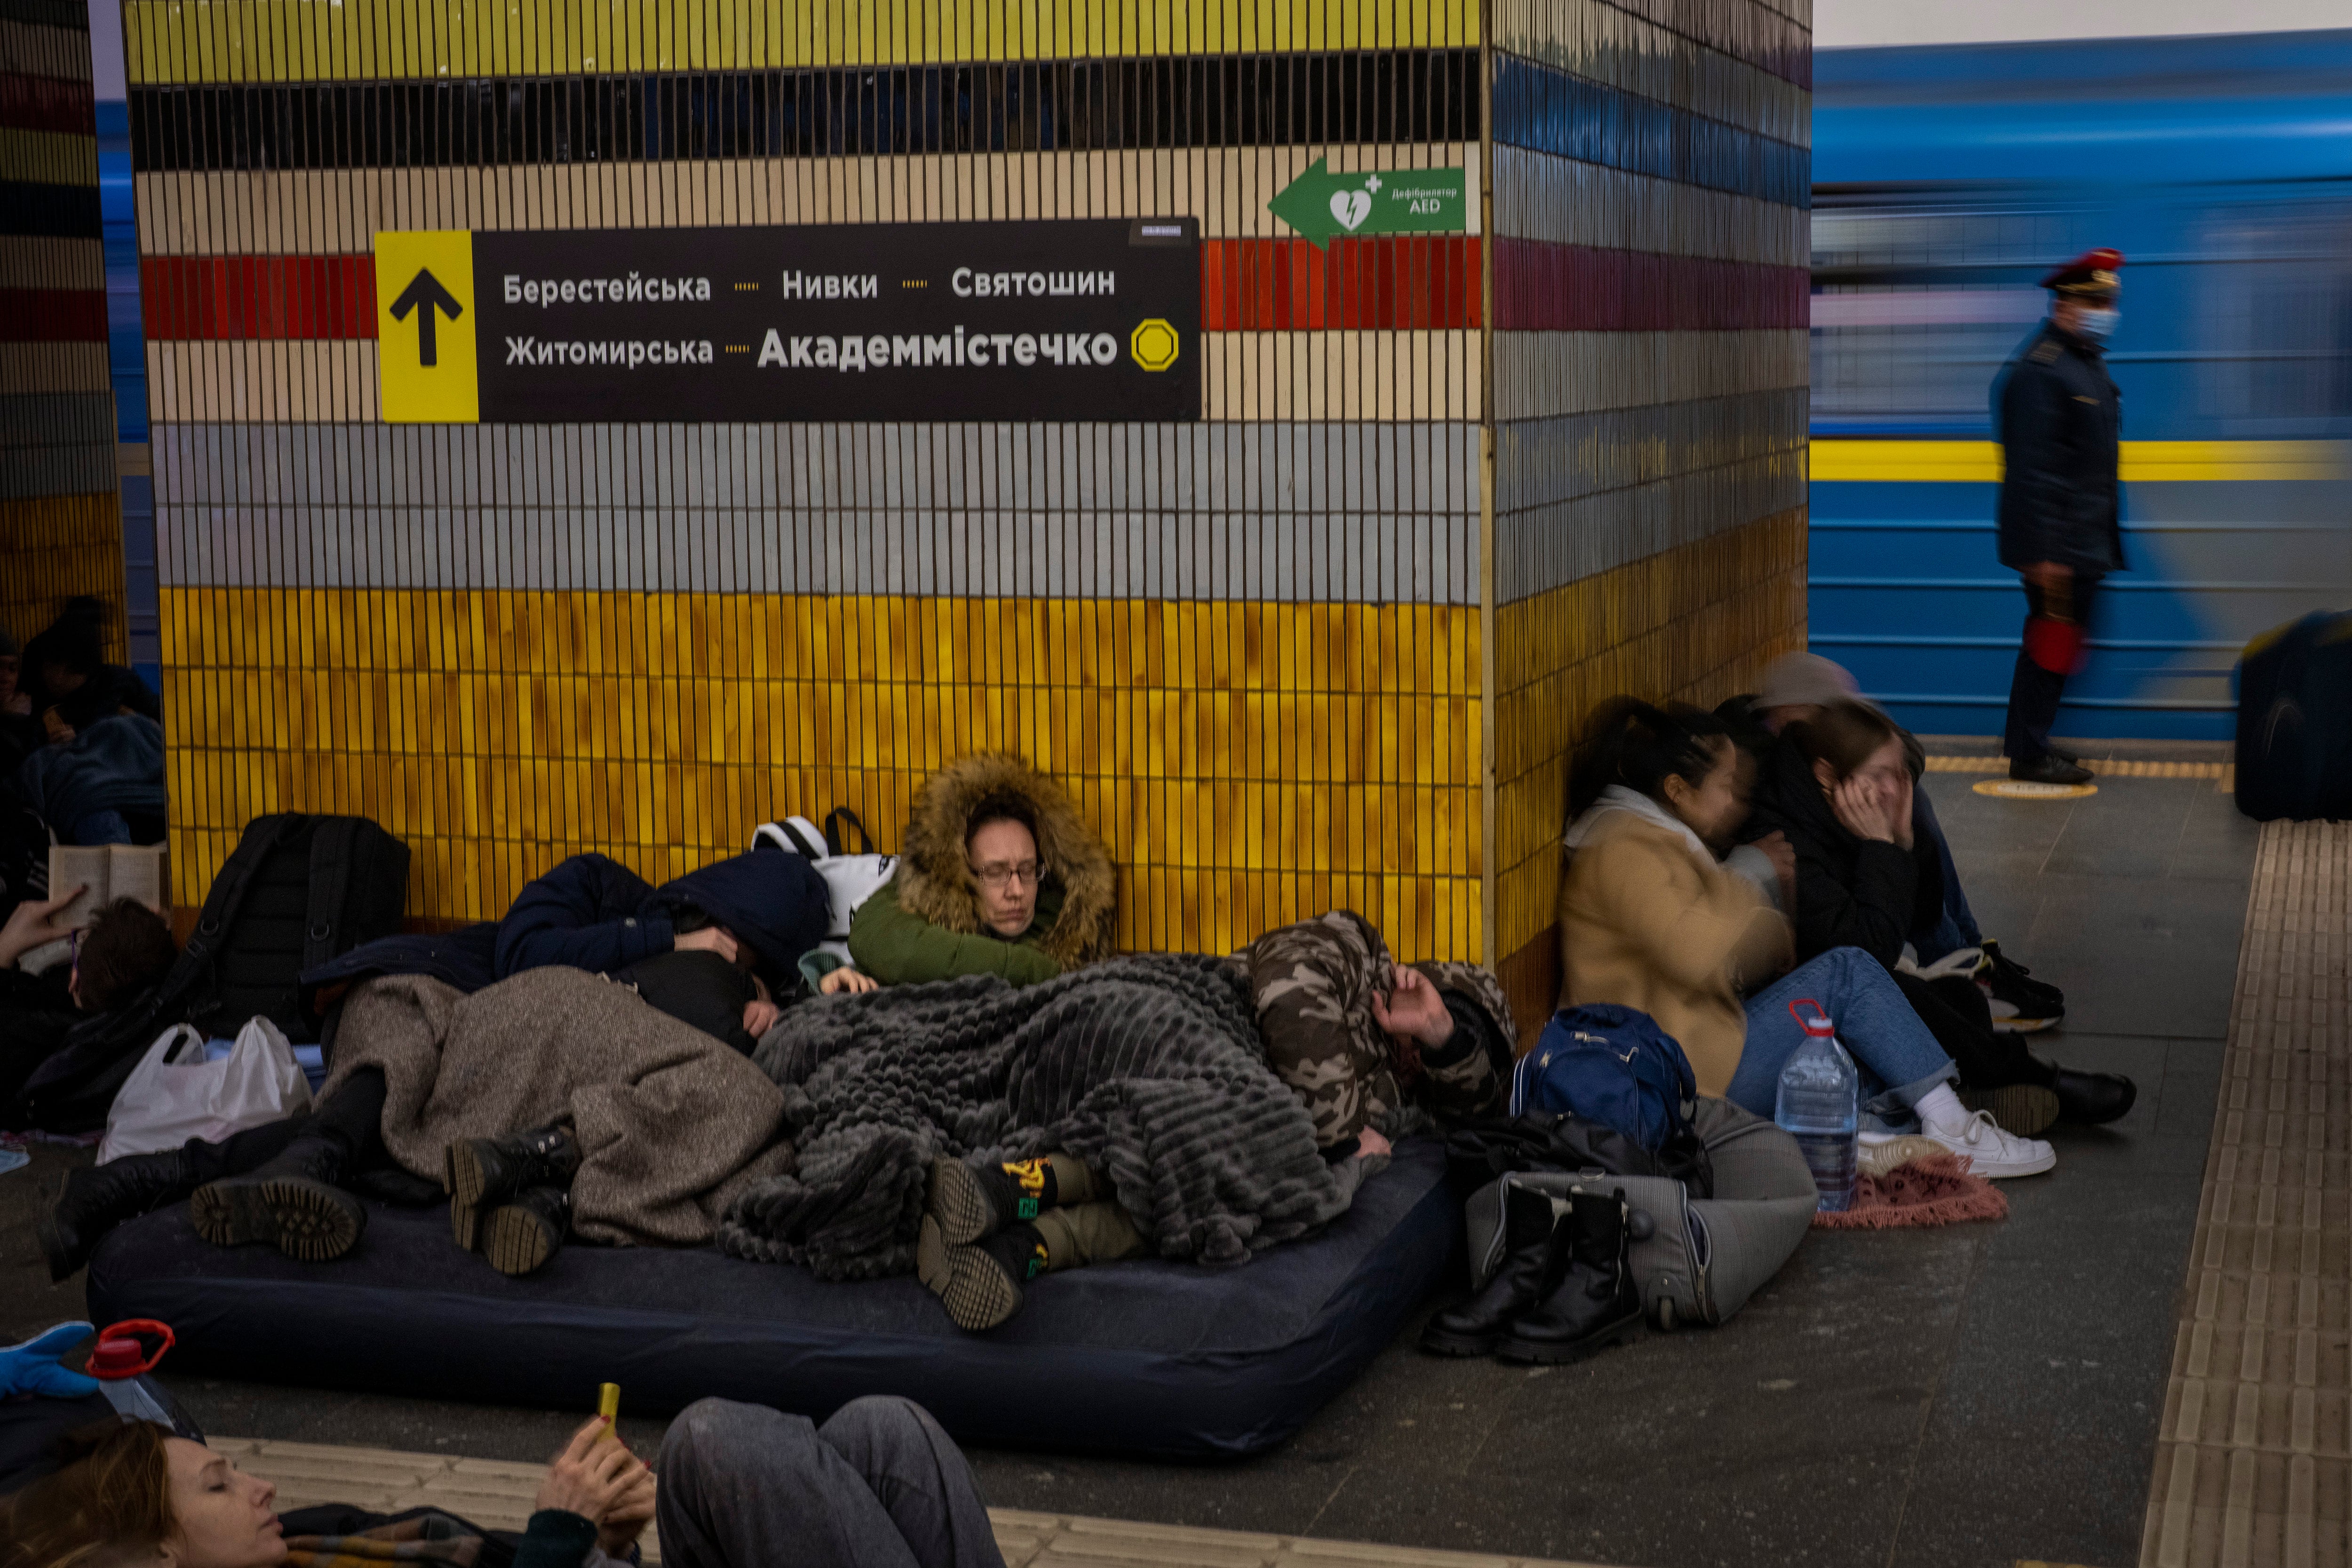 Как живут сейчас люди на украине. Люди в метро. Украинцы ночуют в метро. Украинцы сидят в метро.